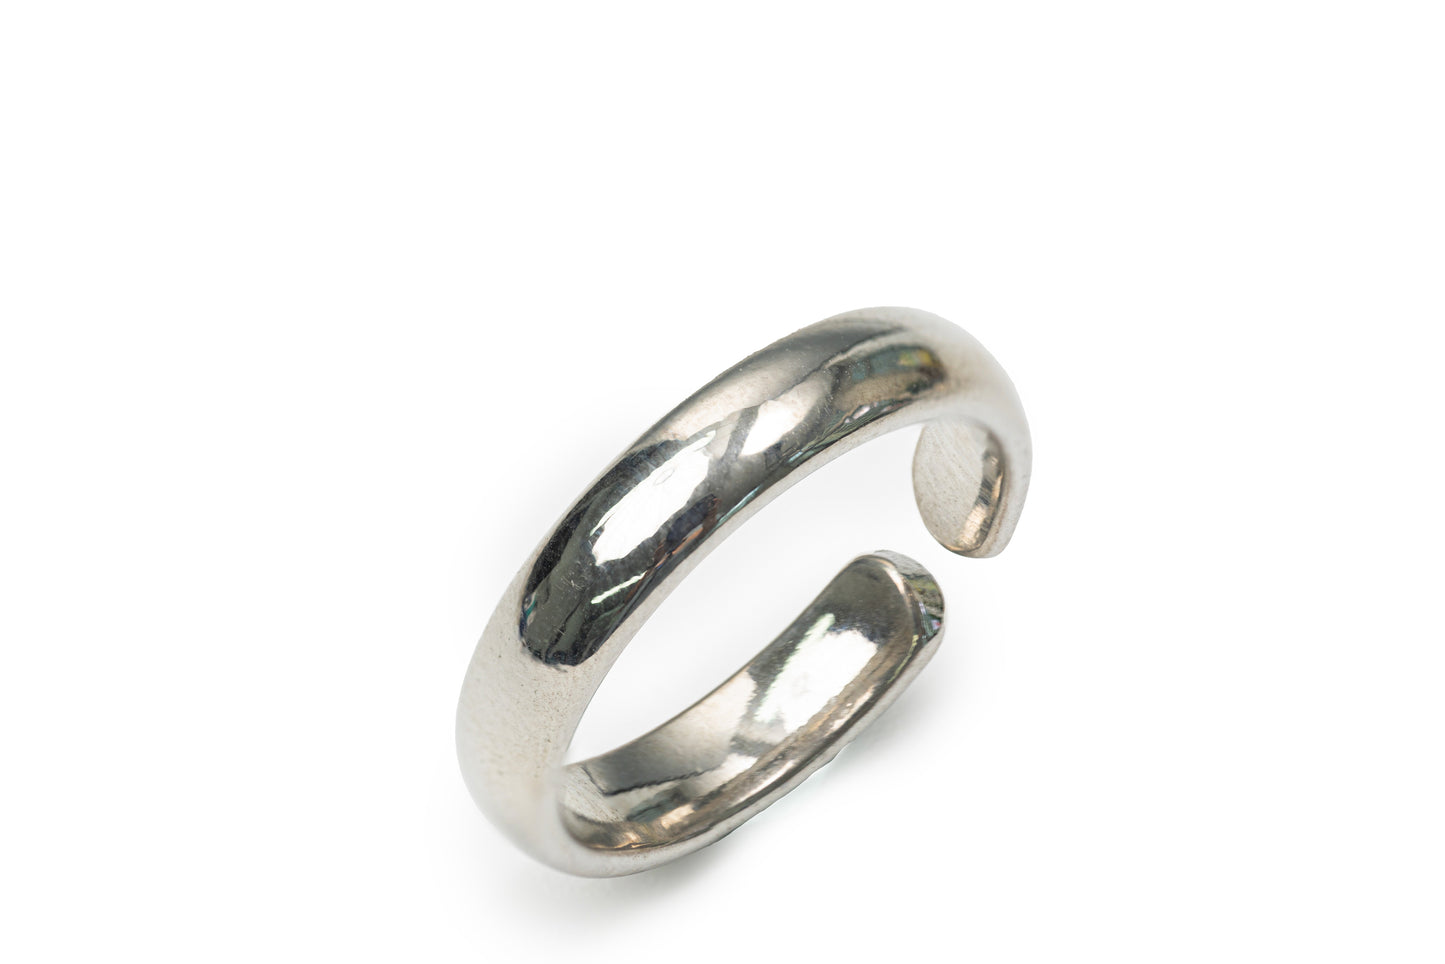 Planderful Glazed Stainless Steel Ring - Silver Ring for Women